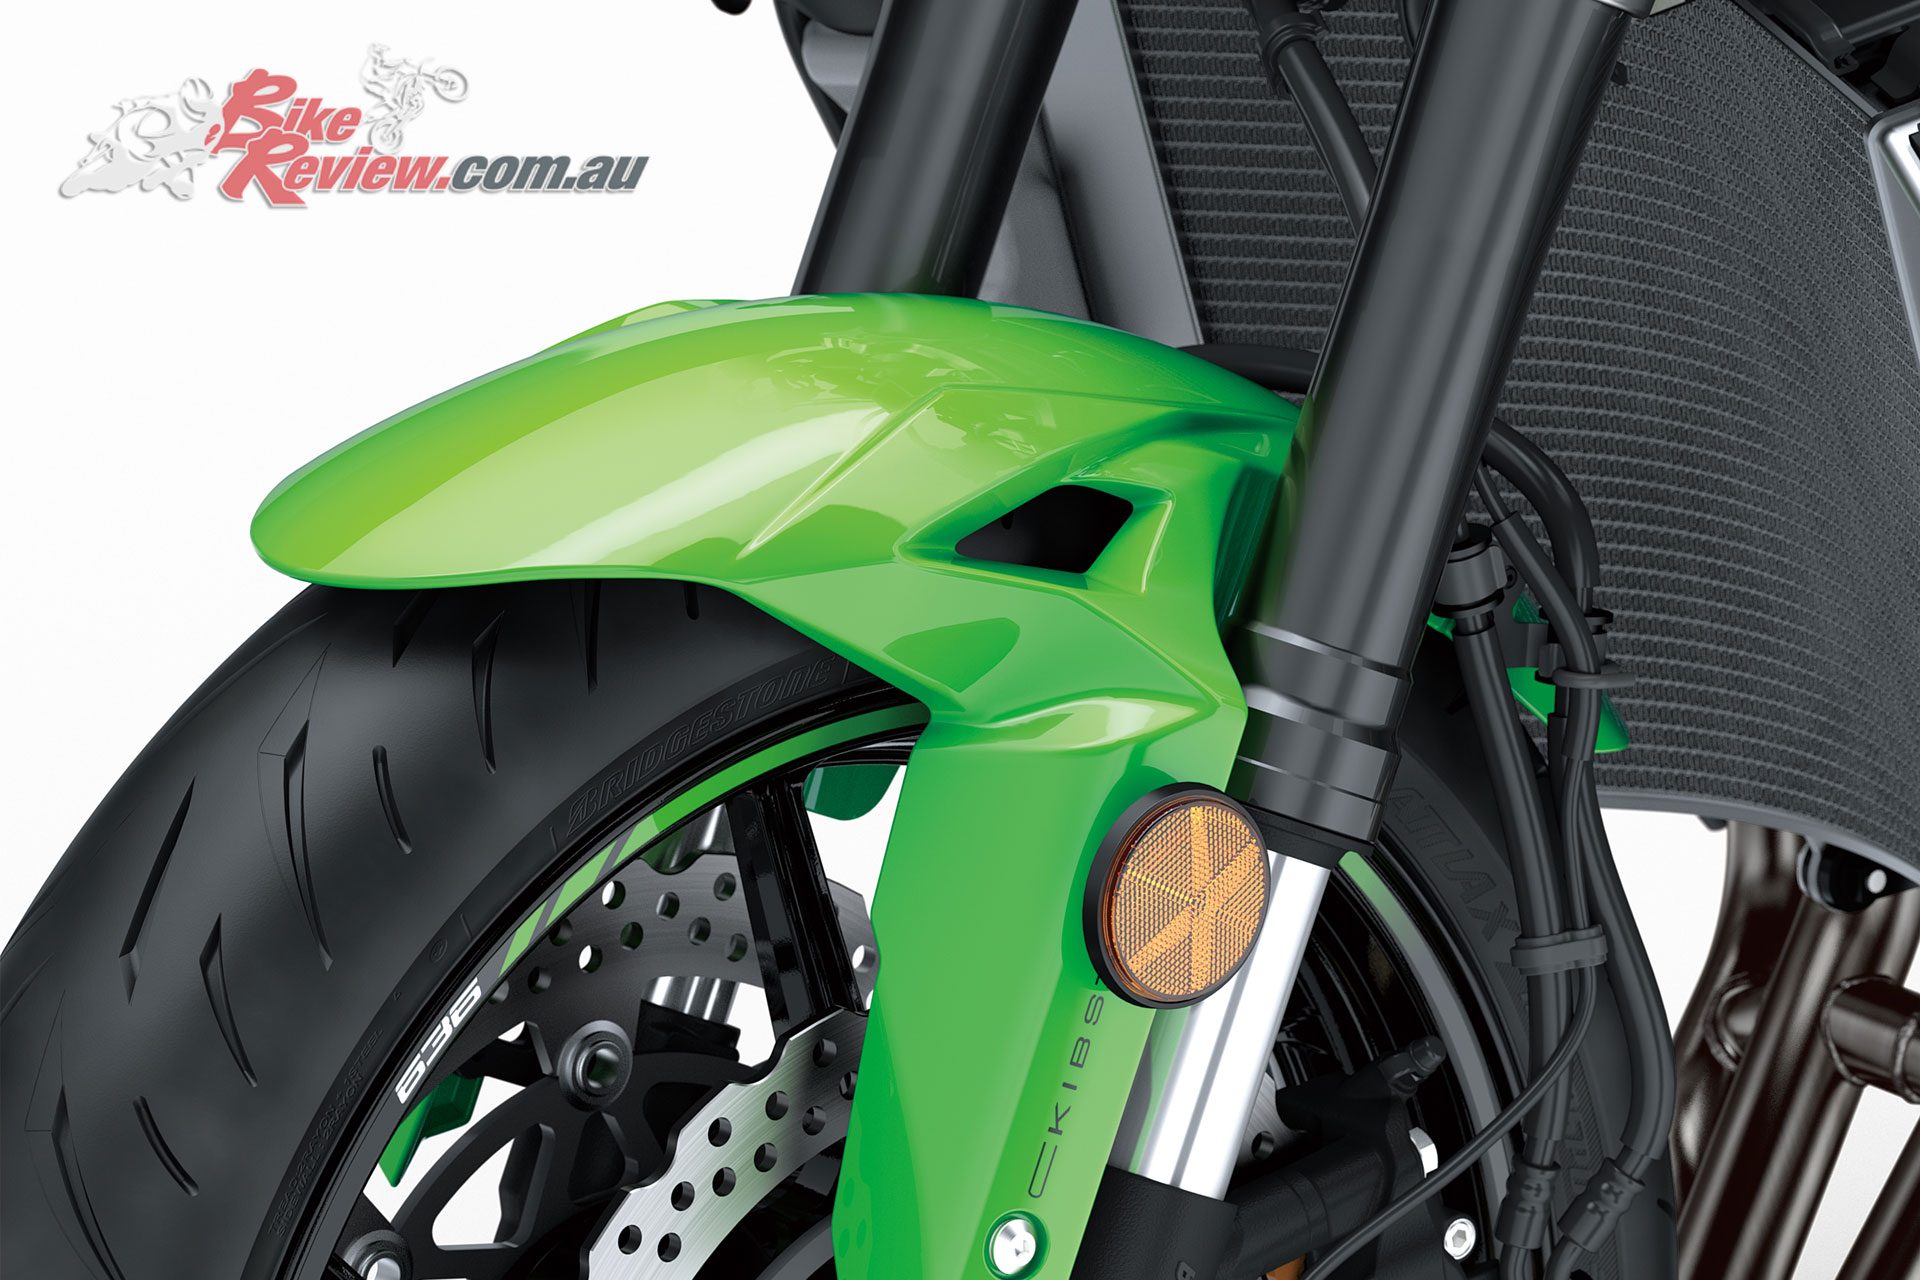 Model Update: 2019 Kawasaki Ninja ZX-6R 636 - Bike Review